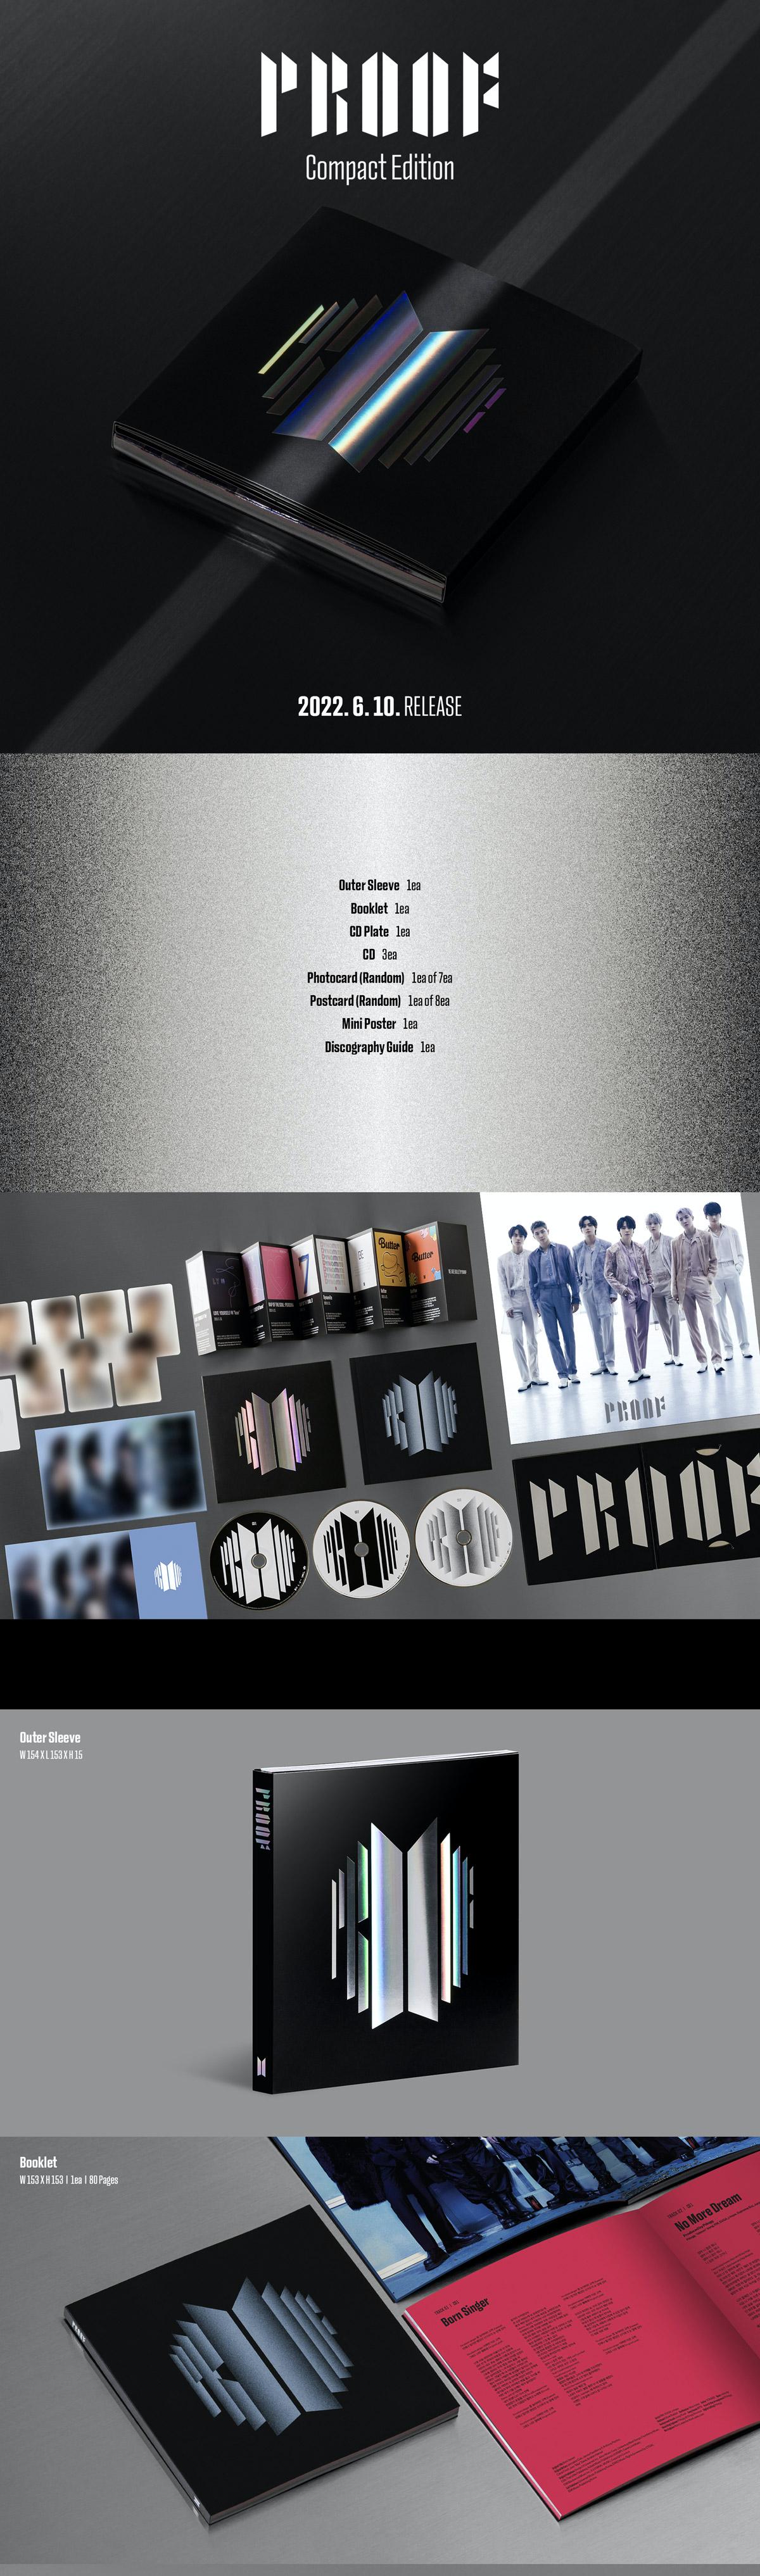 K-Pop CD BTS 'Proof' (Compact Edition)